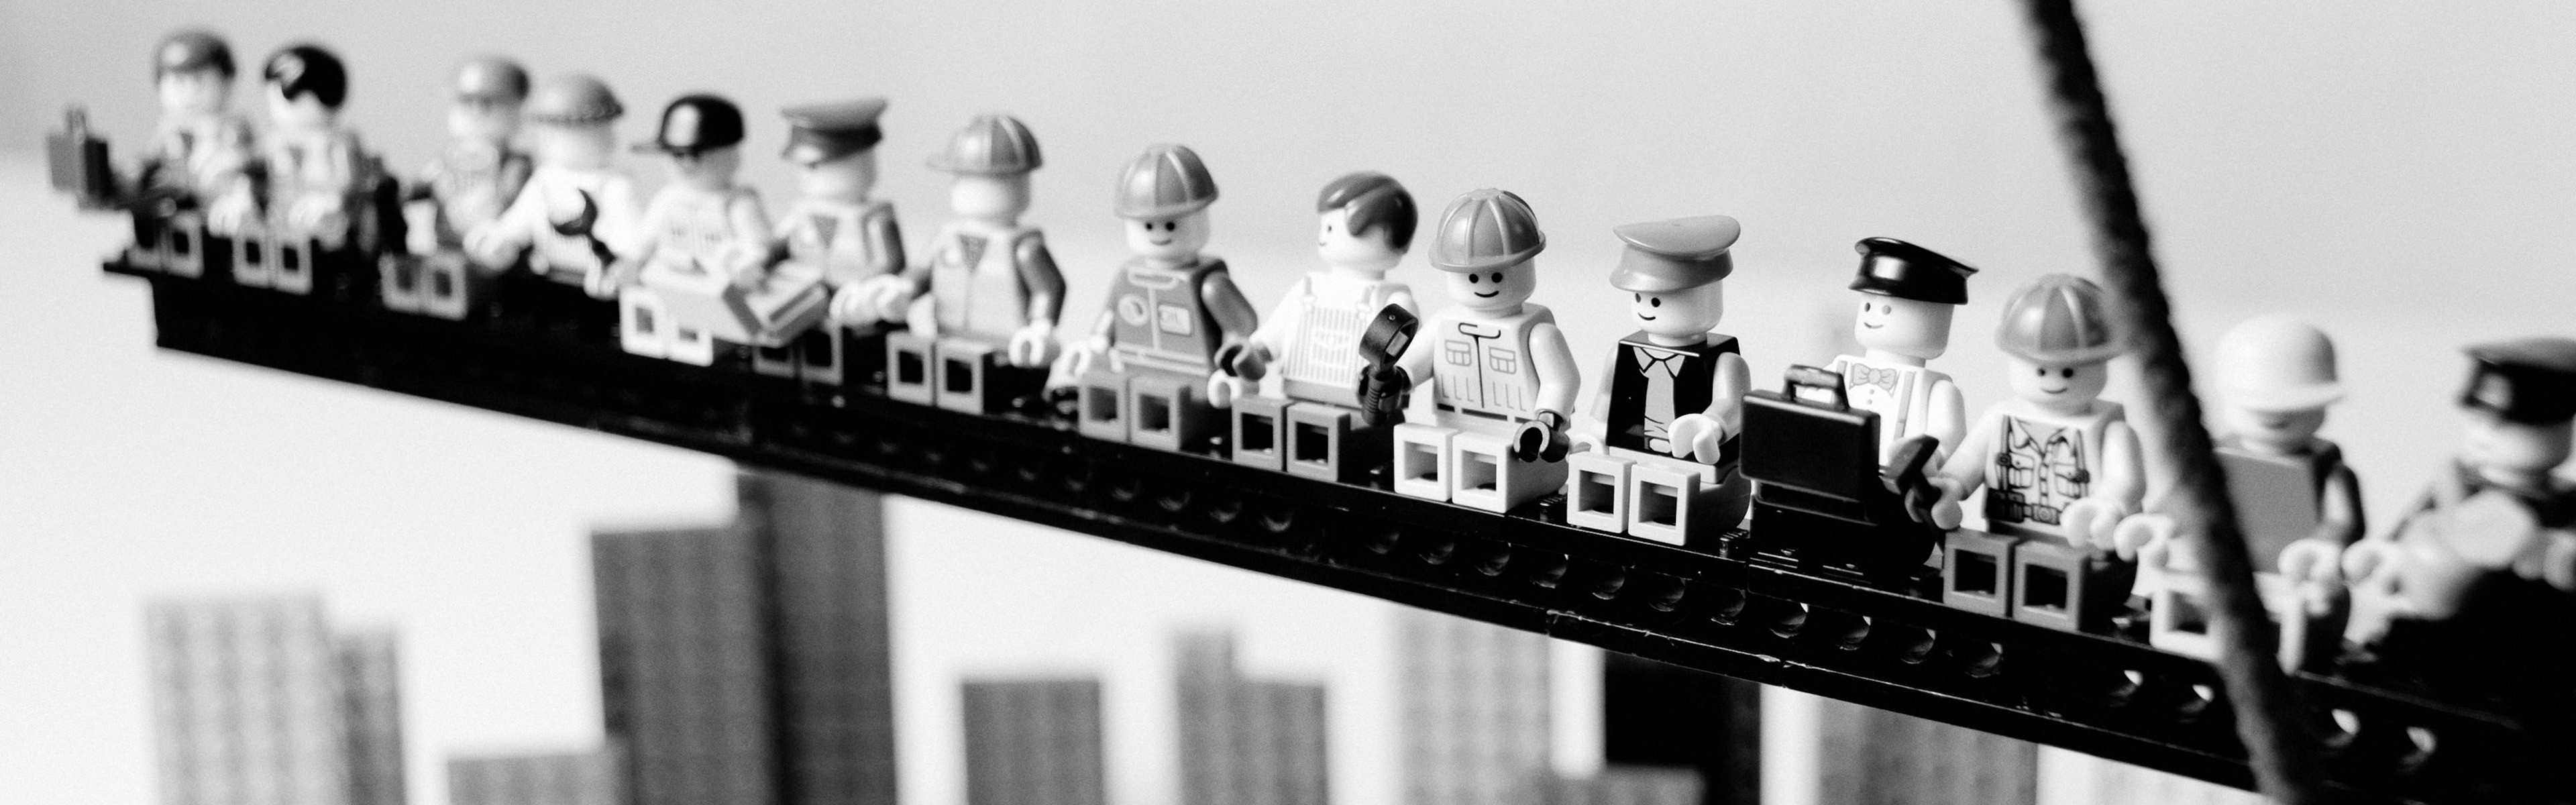 General 3840x1200 monochrome toys LEGO parody skyscraper workers figurines